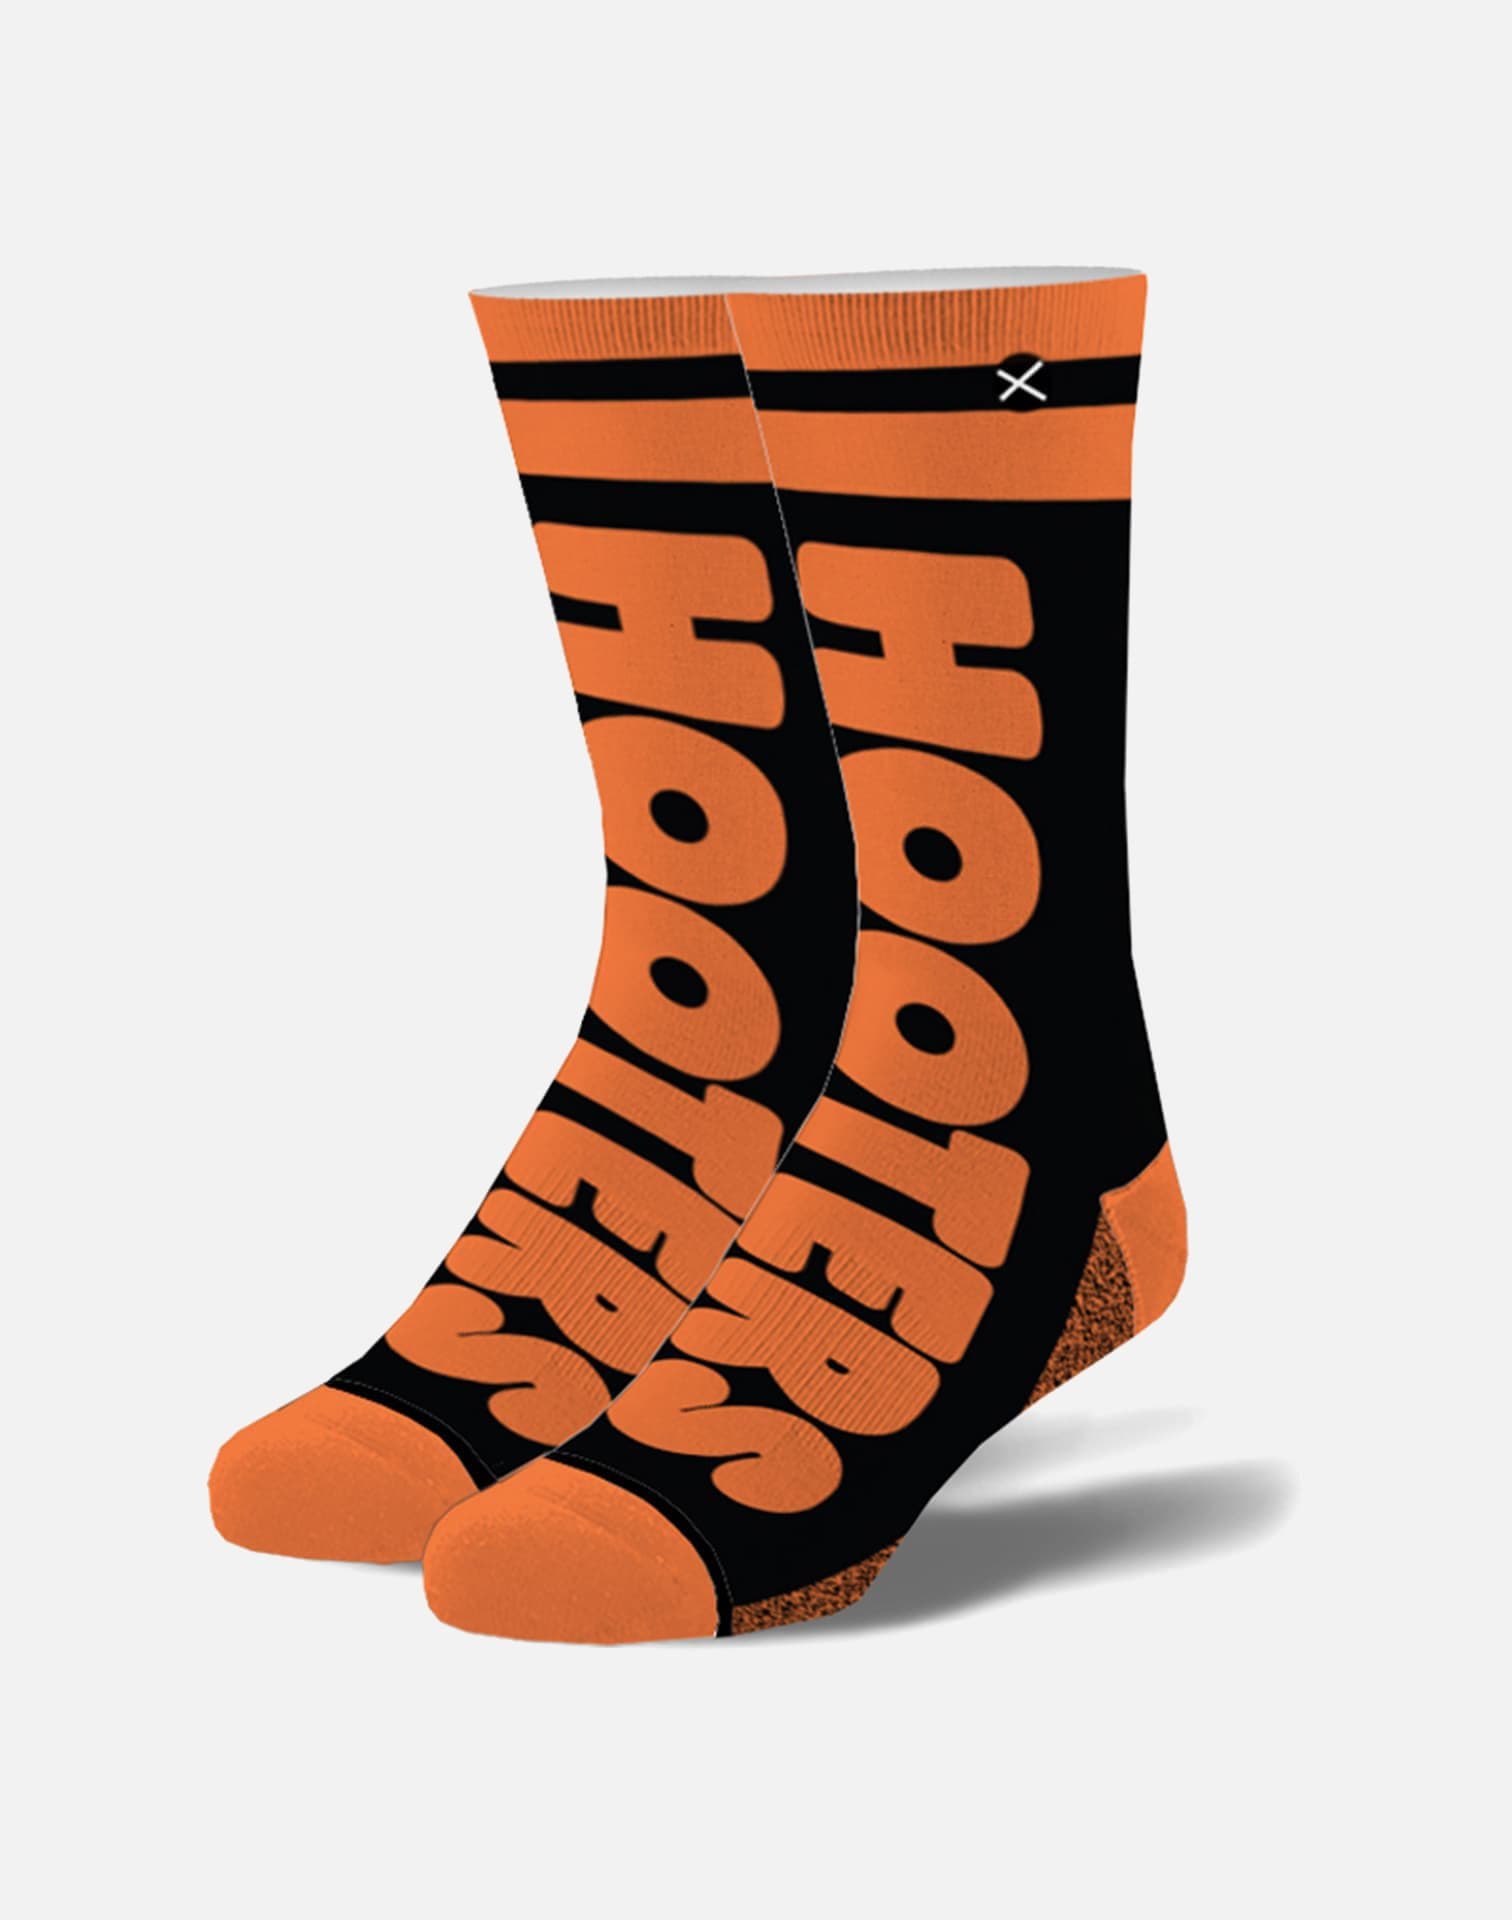 Odd Sox Hooters Big Logo Crew Socks